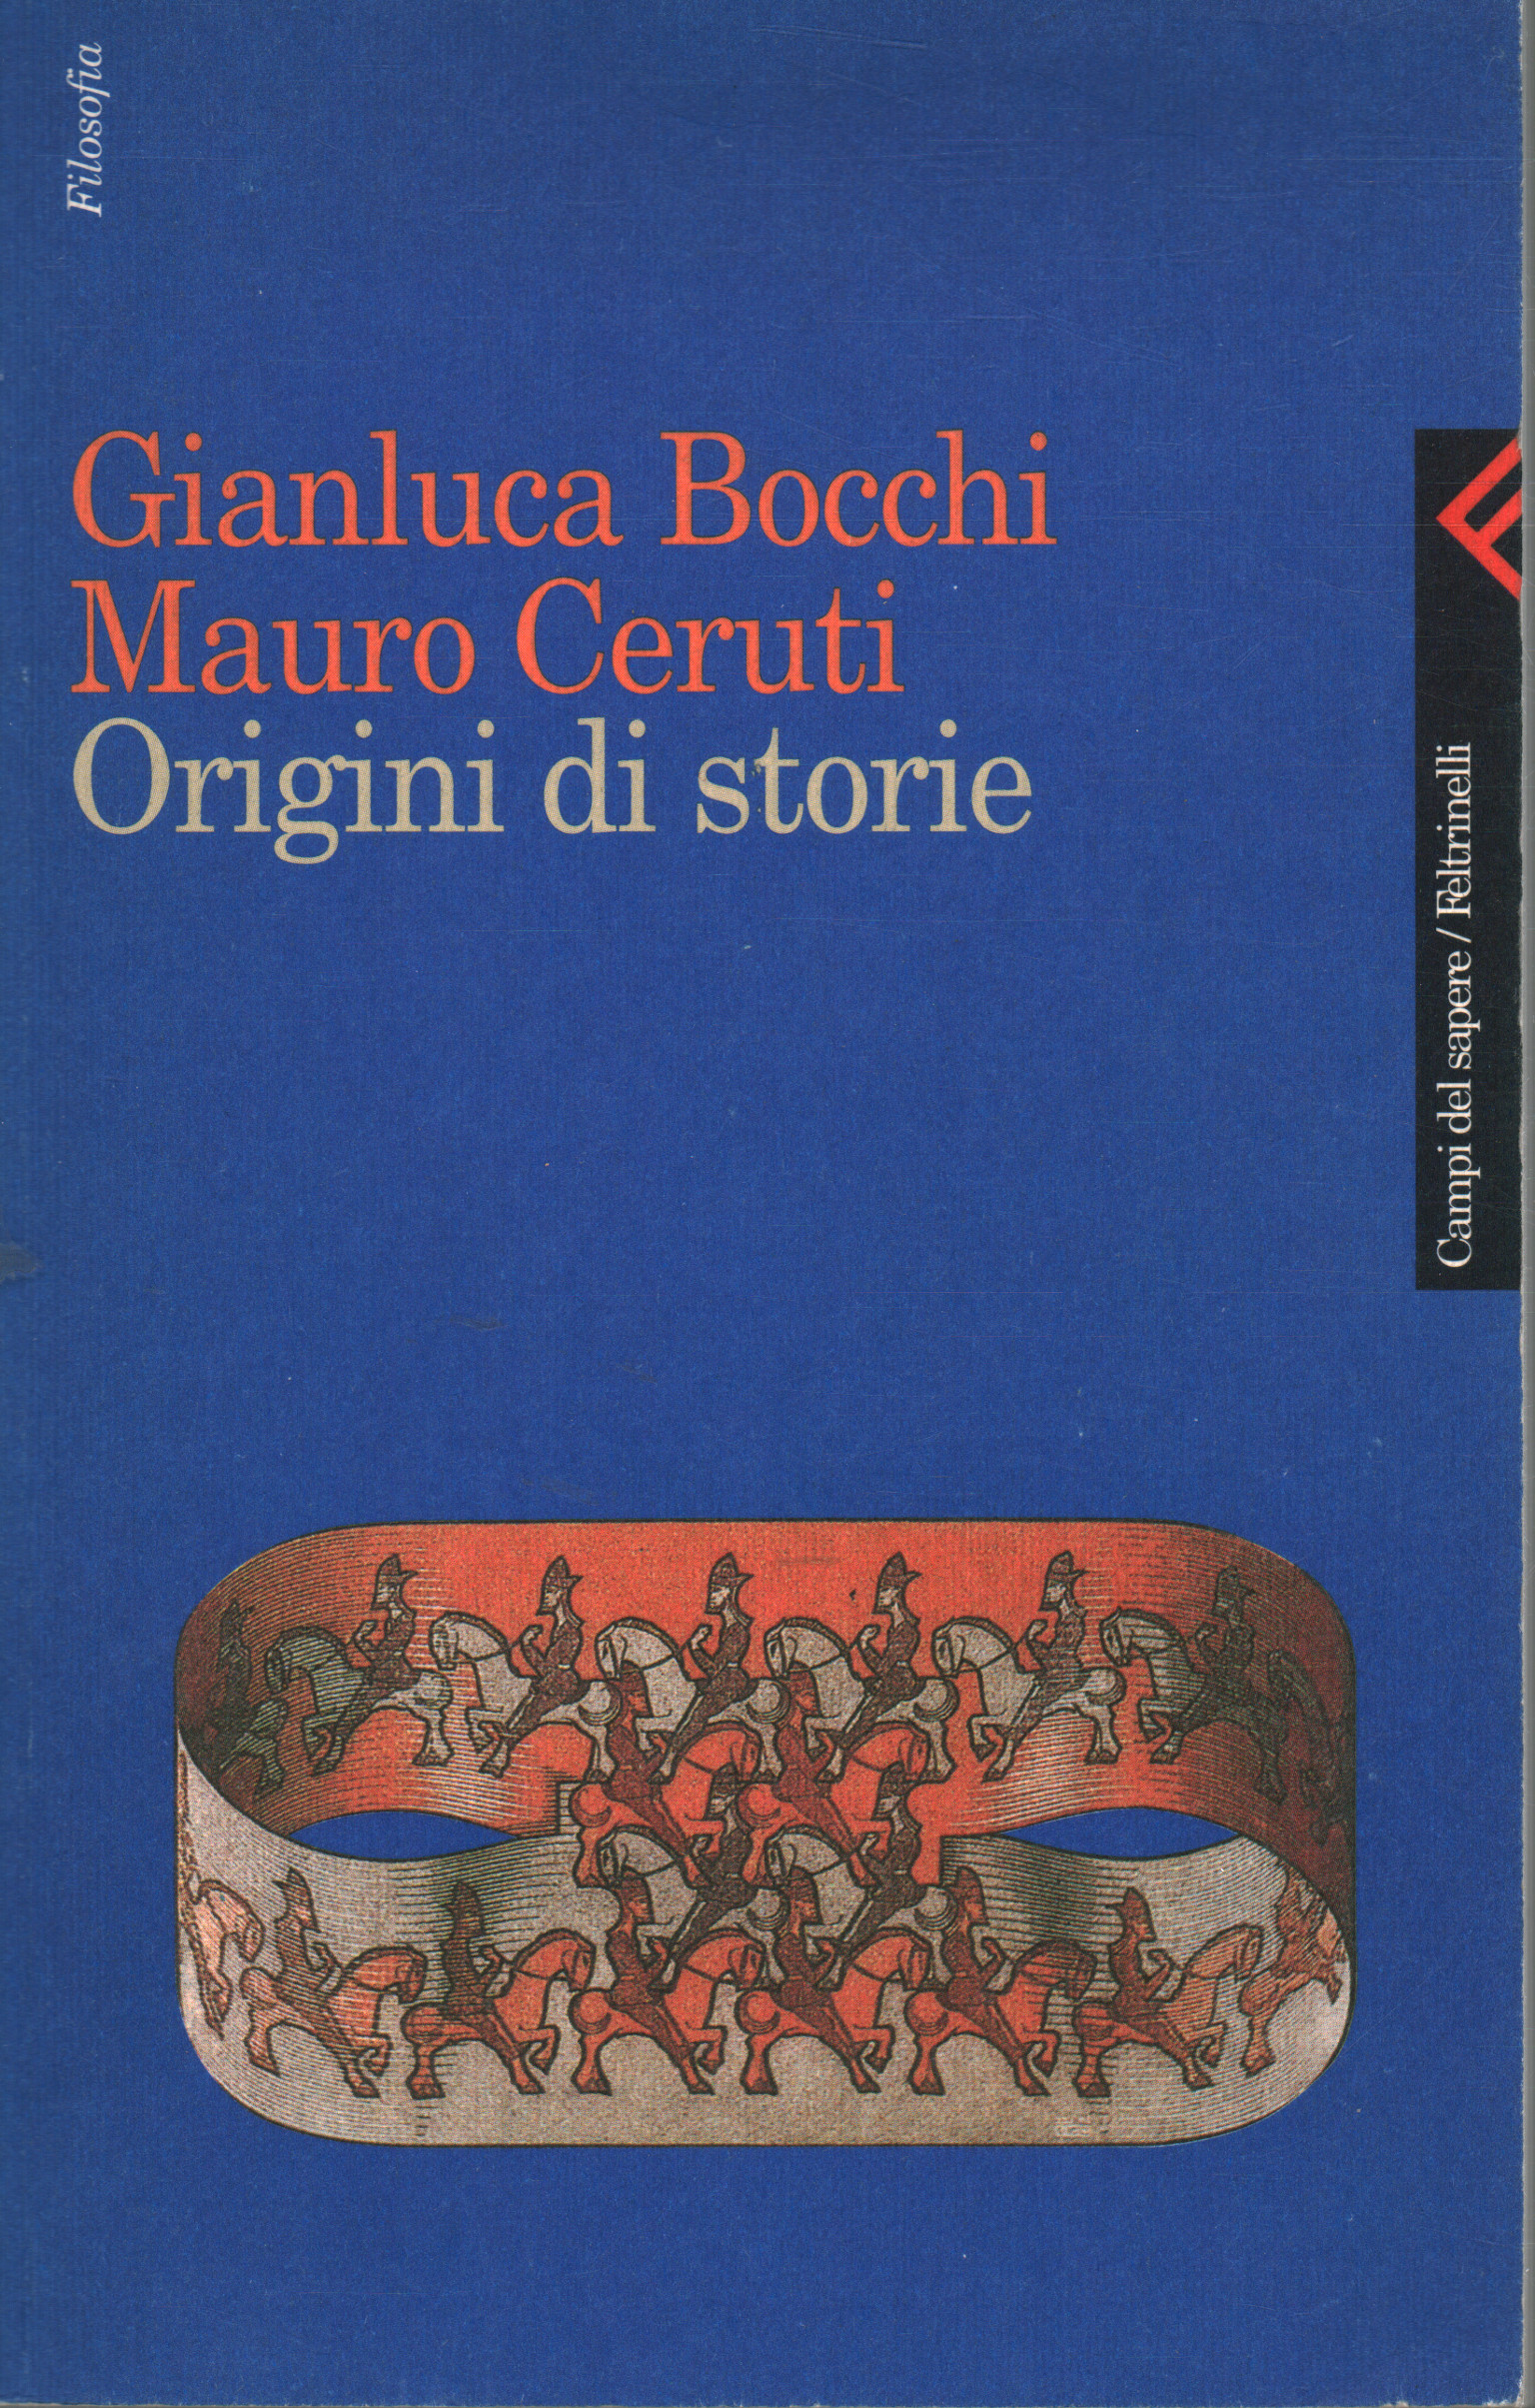 Origini di storie, Gianluca Bocchi e Mauro Ceruti